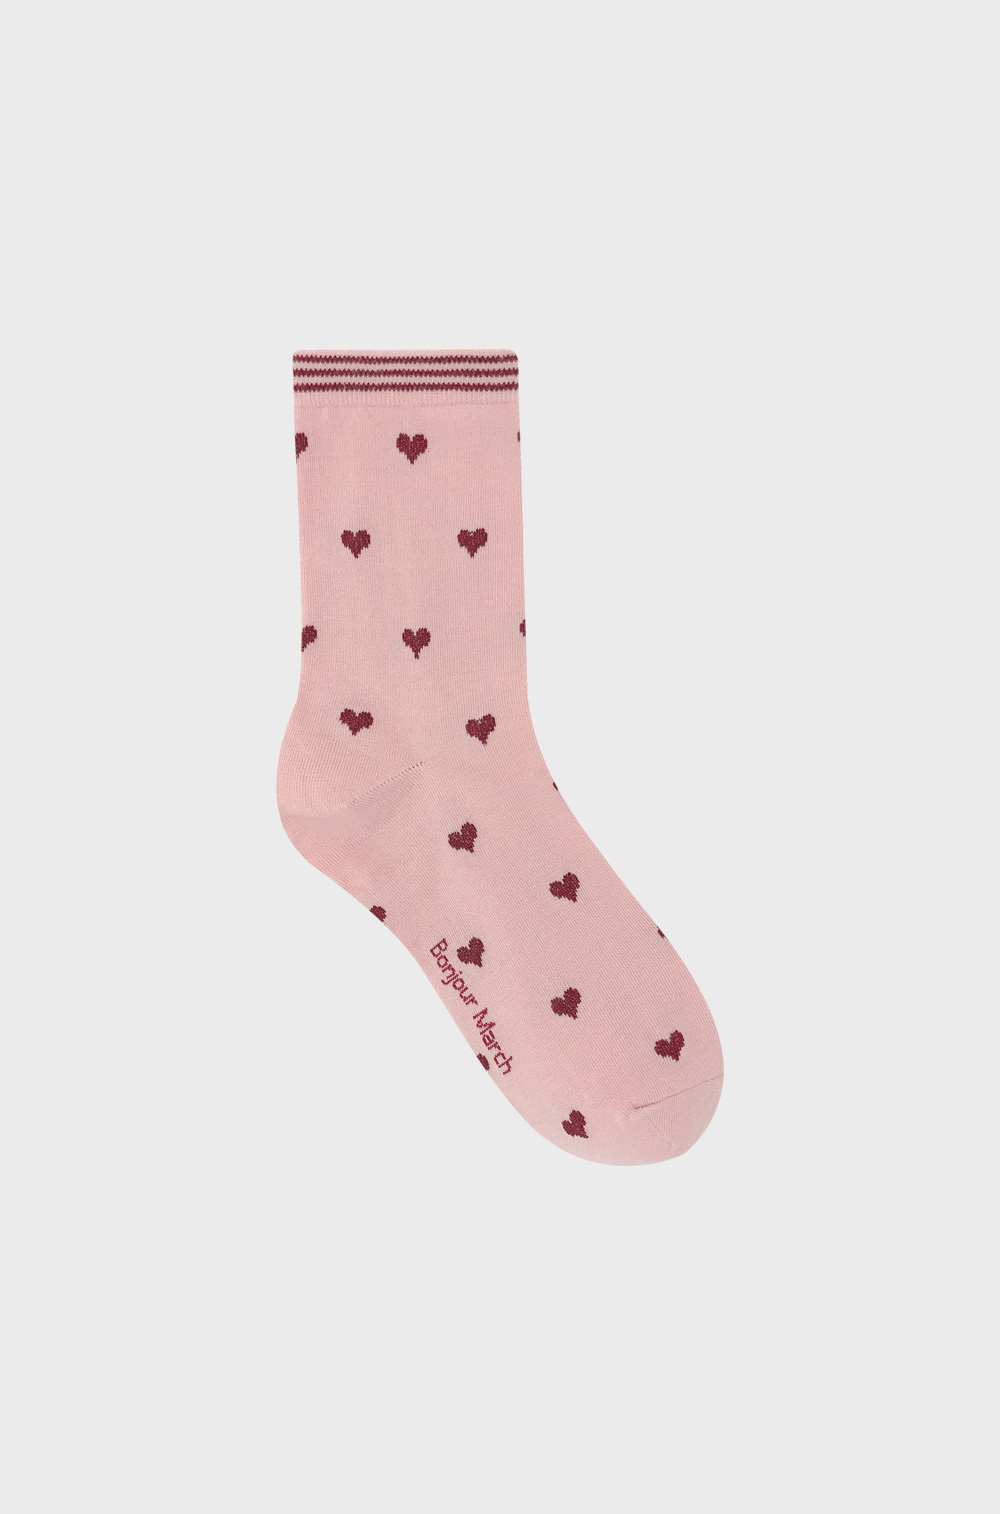 Lolo socks_pink